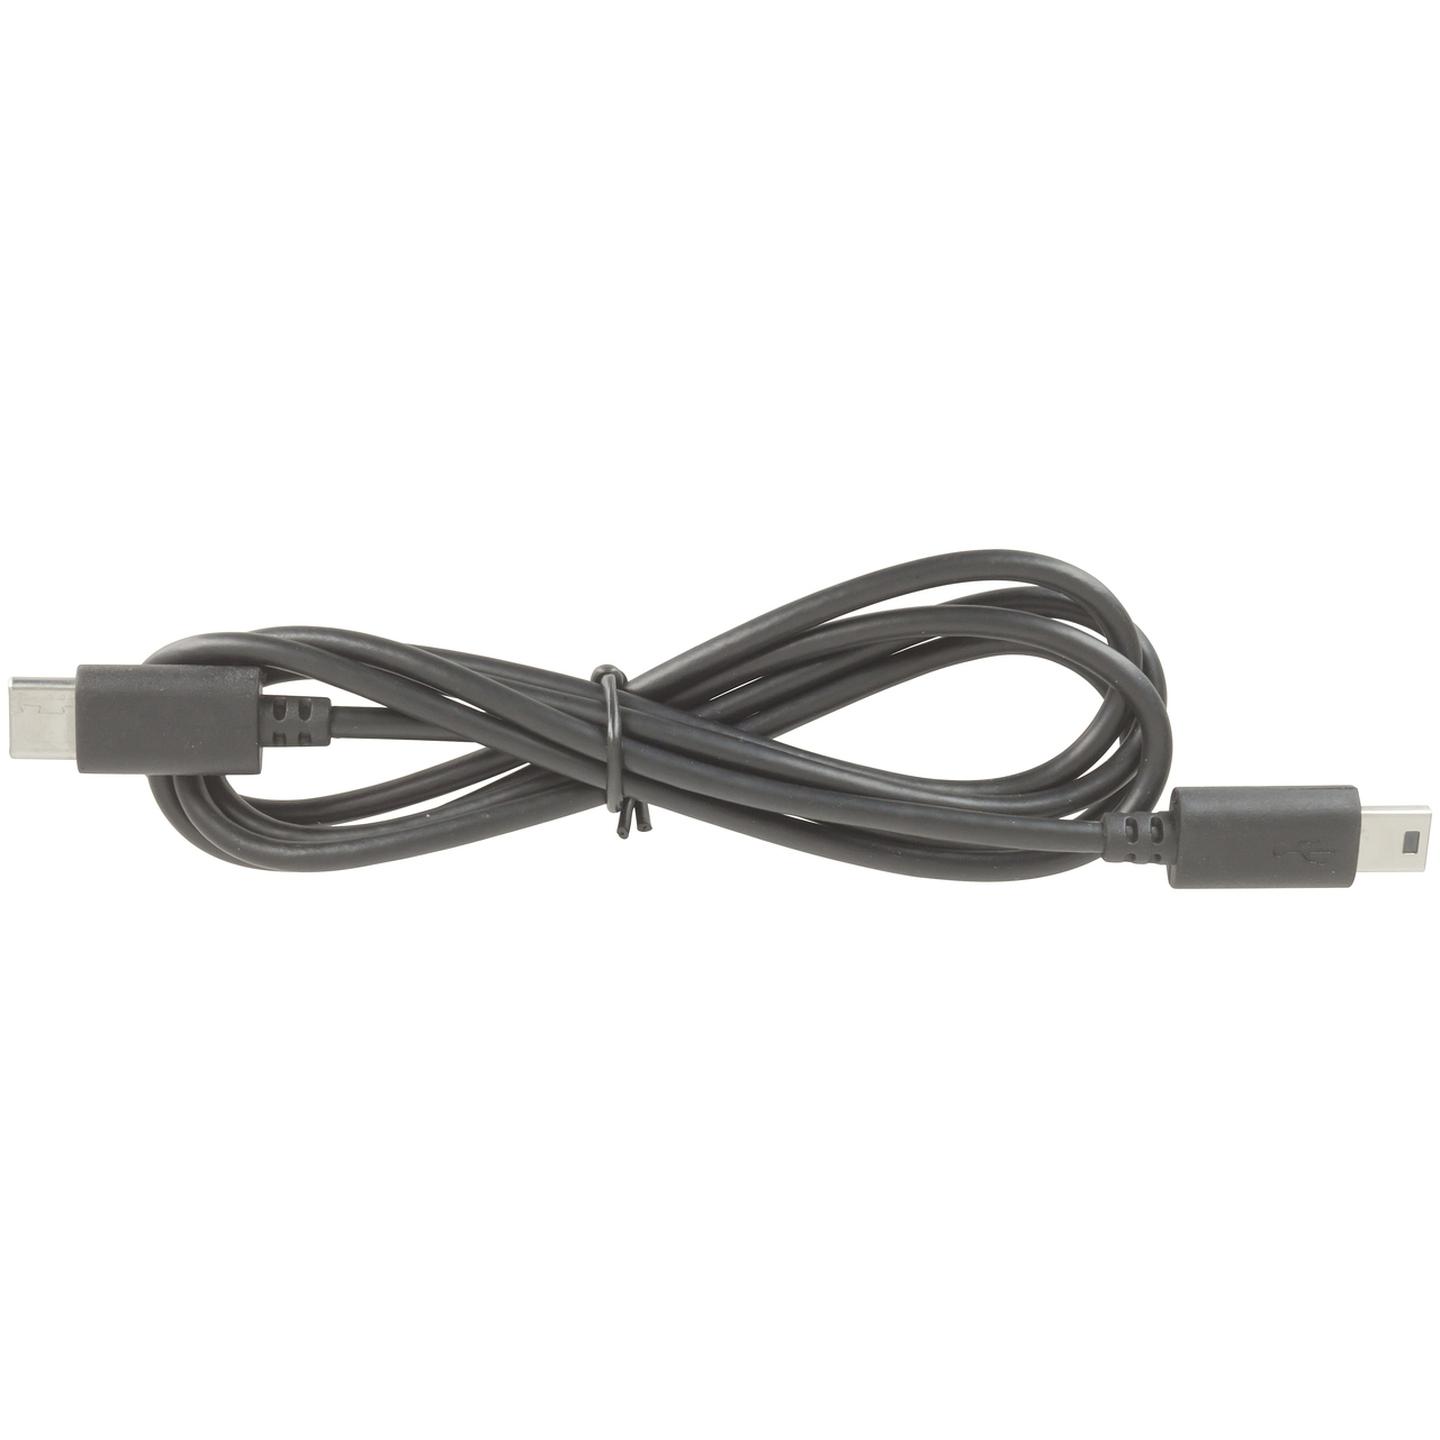 USB Type C to USB 2.0 Mini B Cable 1.8m